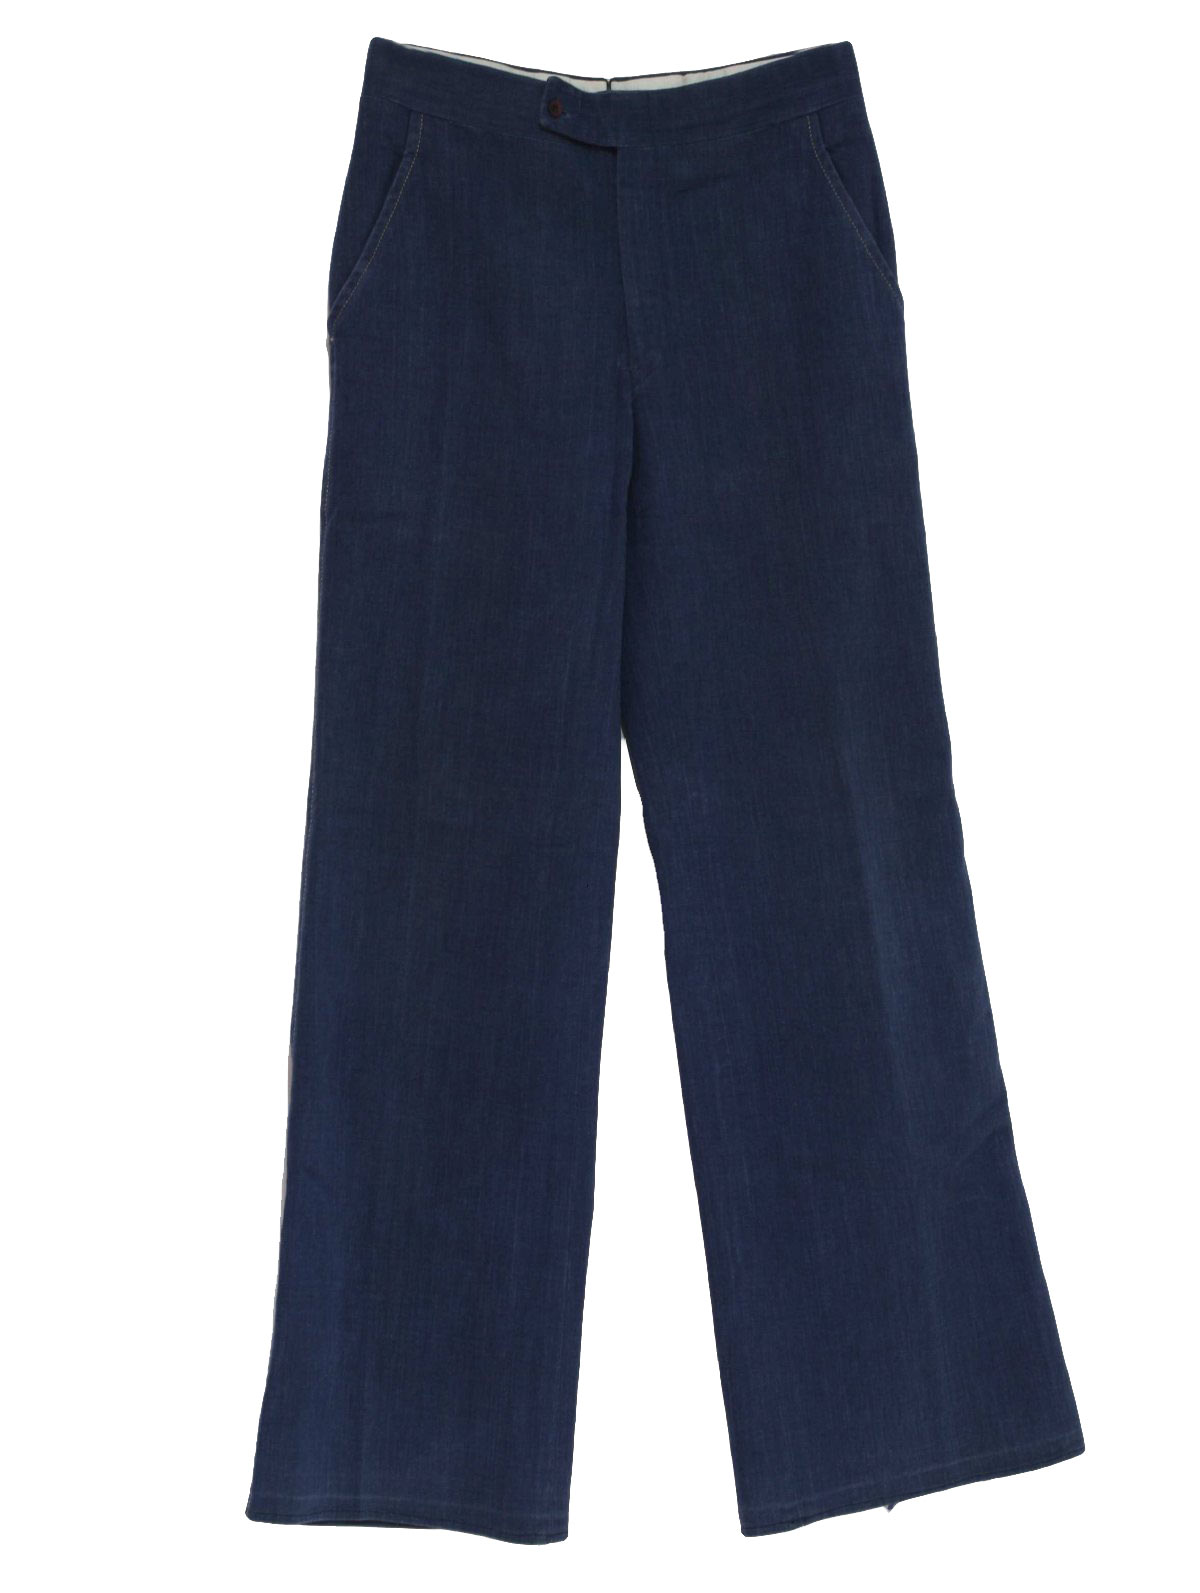 Retro 70's Bellbottom Pants: 70s -No label- Mens blue denim chambray ...